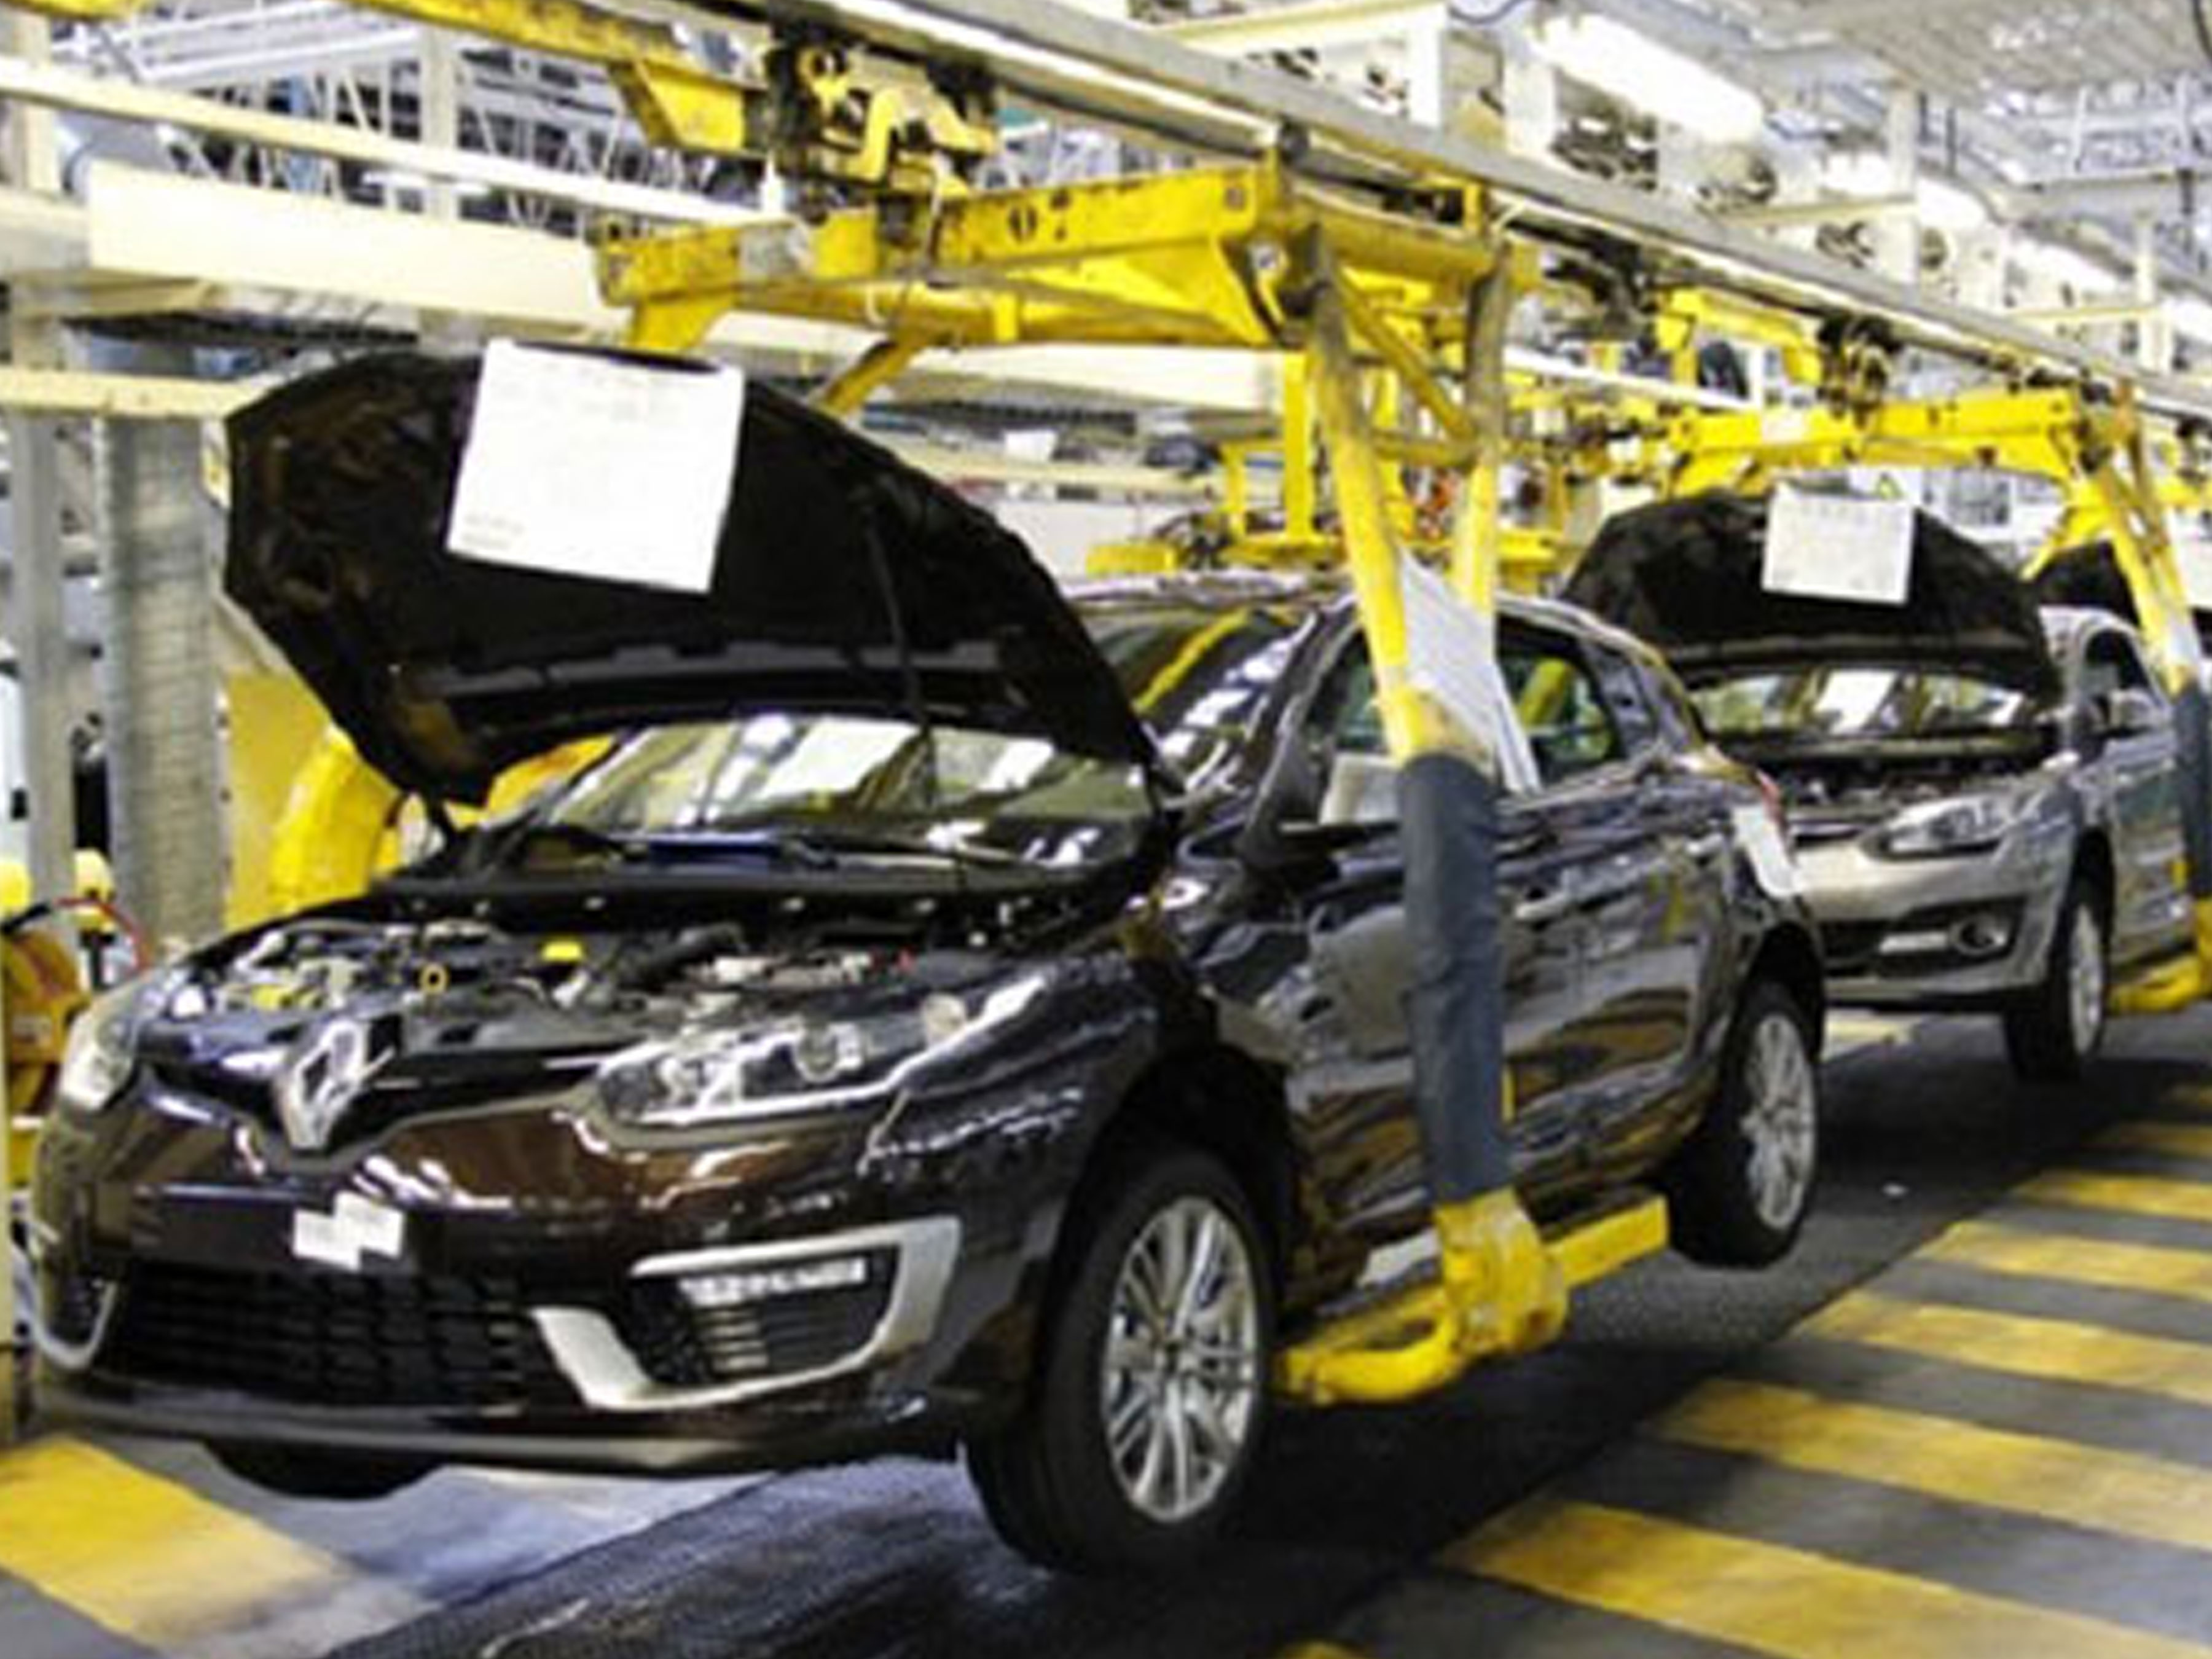 Renault factory, video screenshot